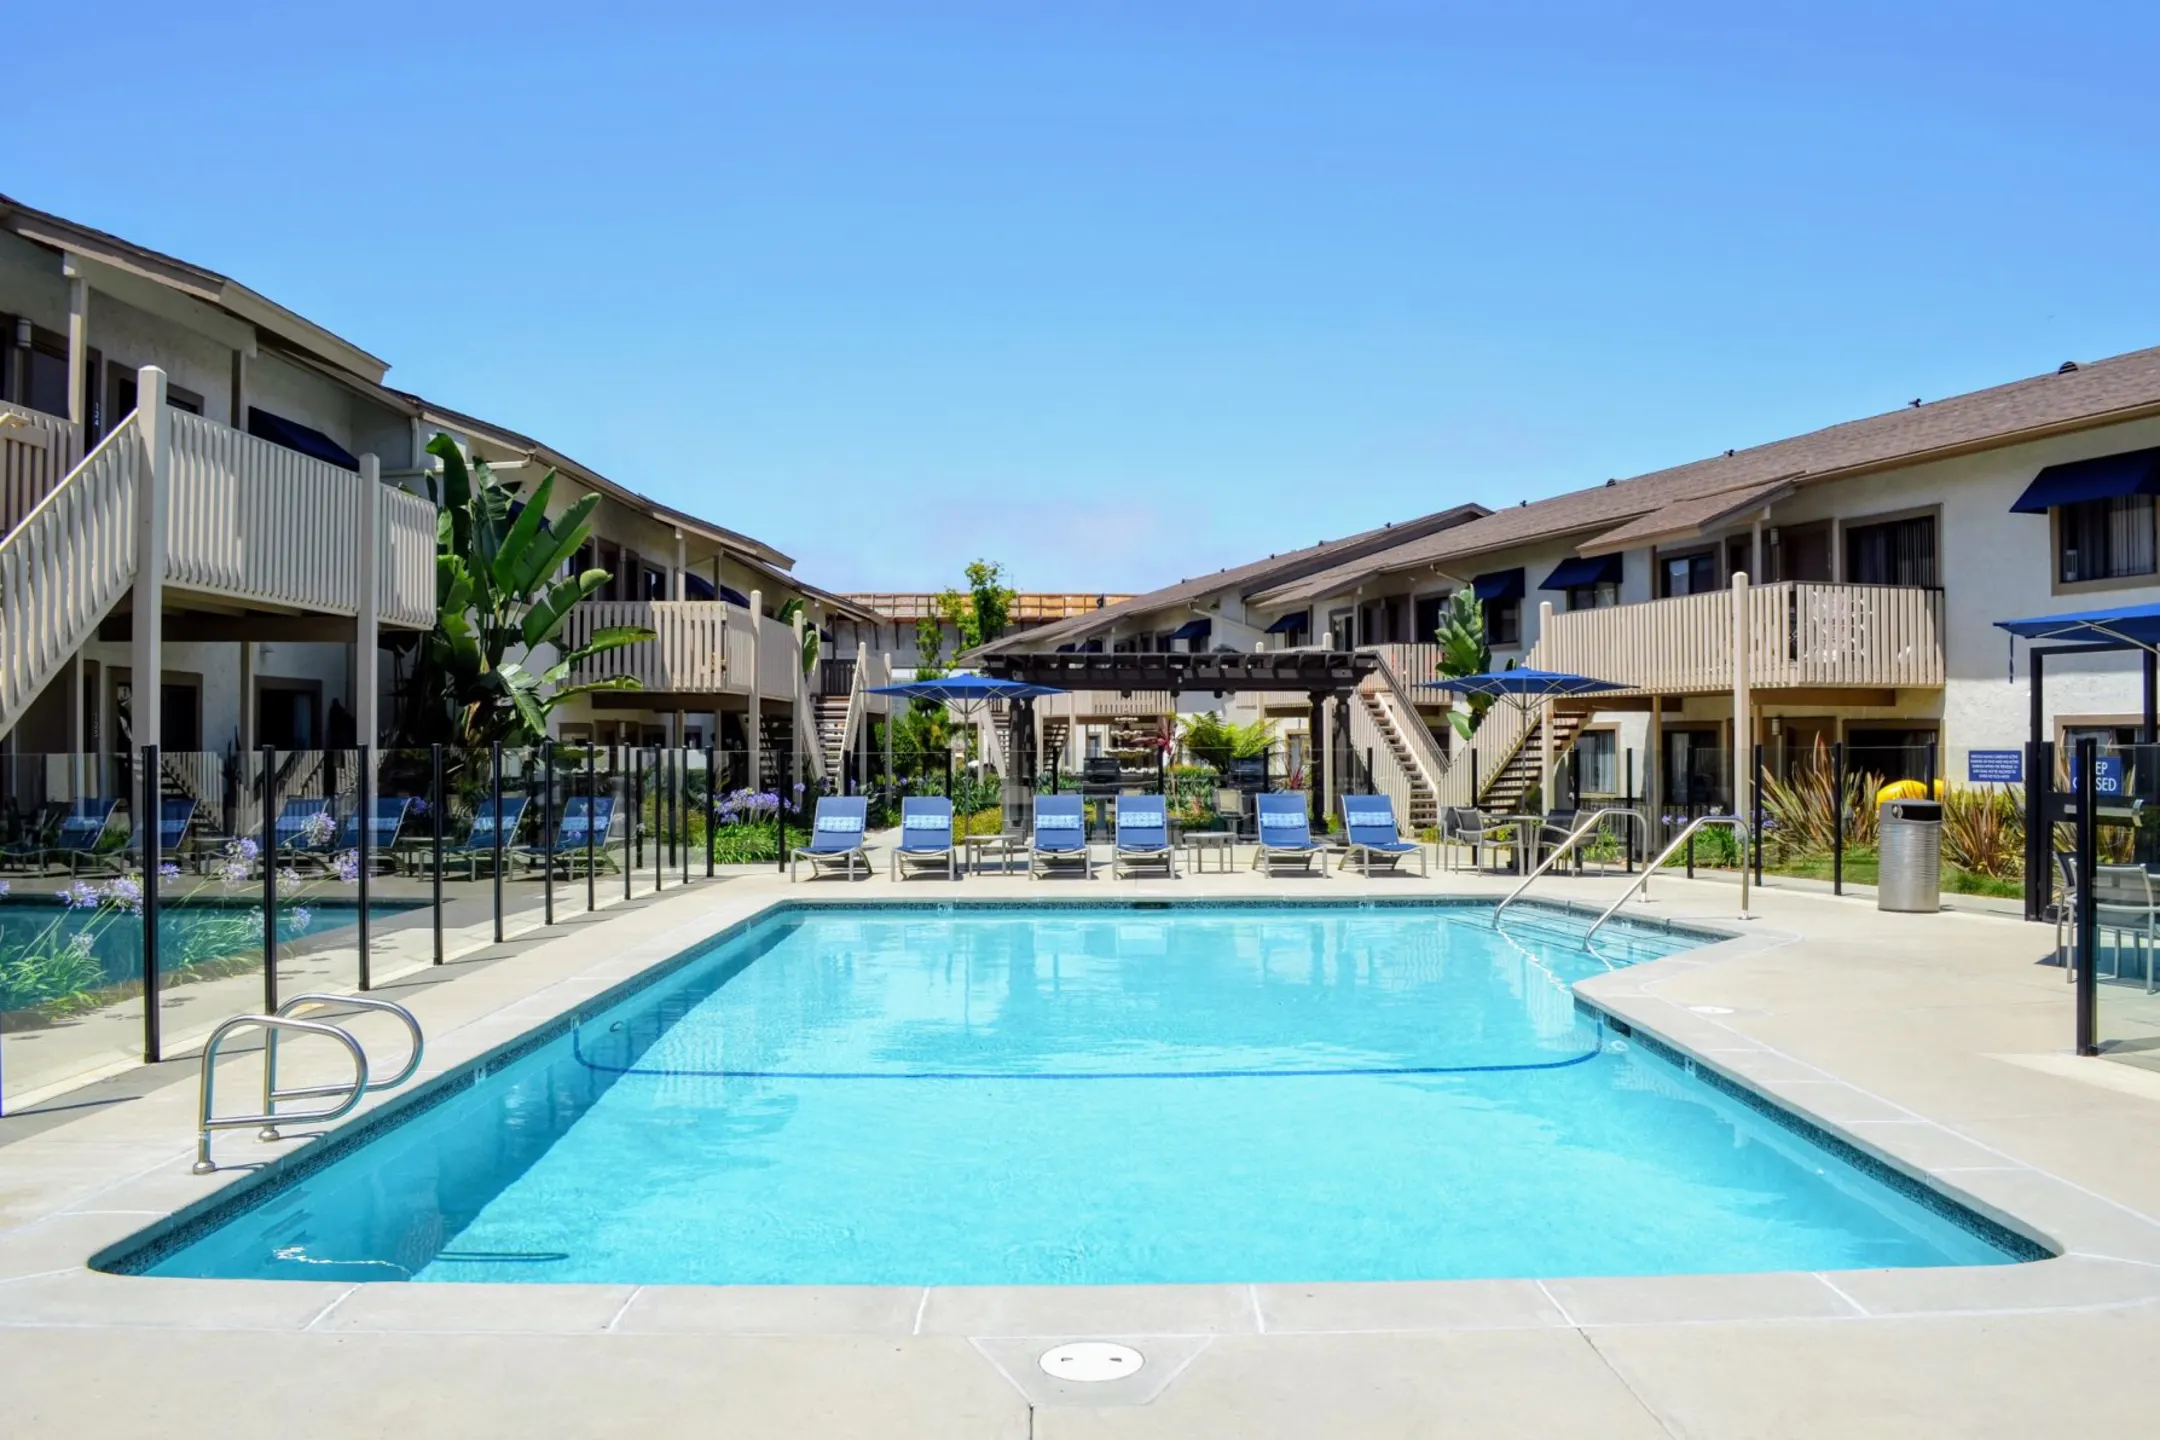 Pool - La Jolla Canyon - San Diego, CA